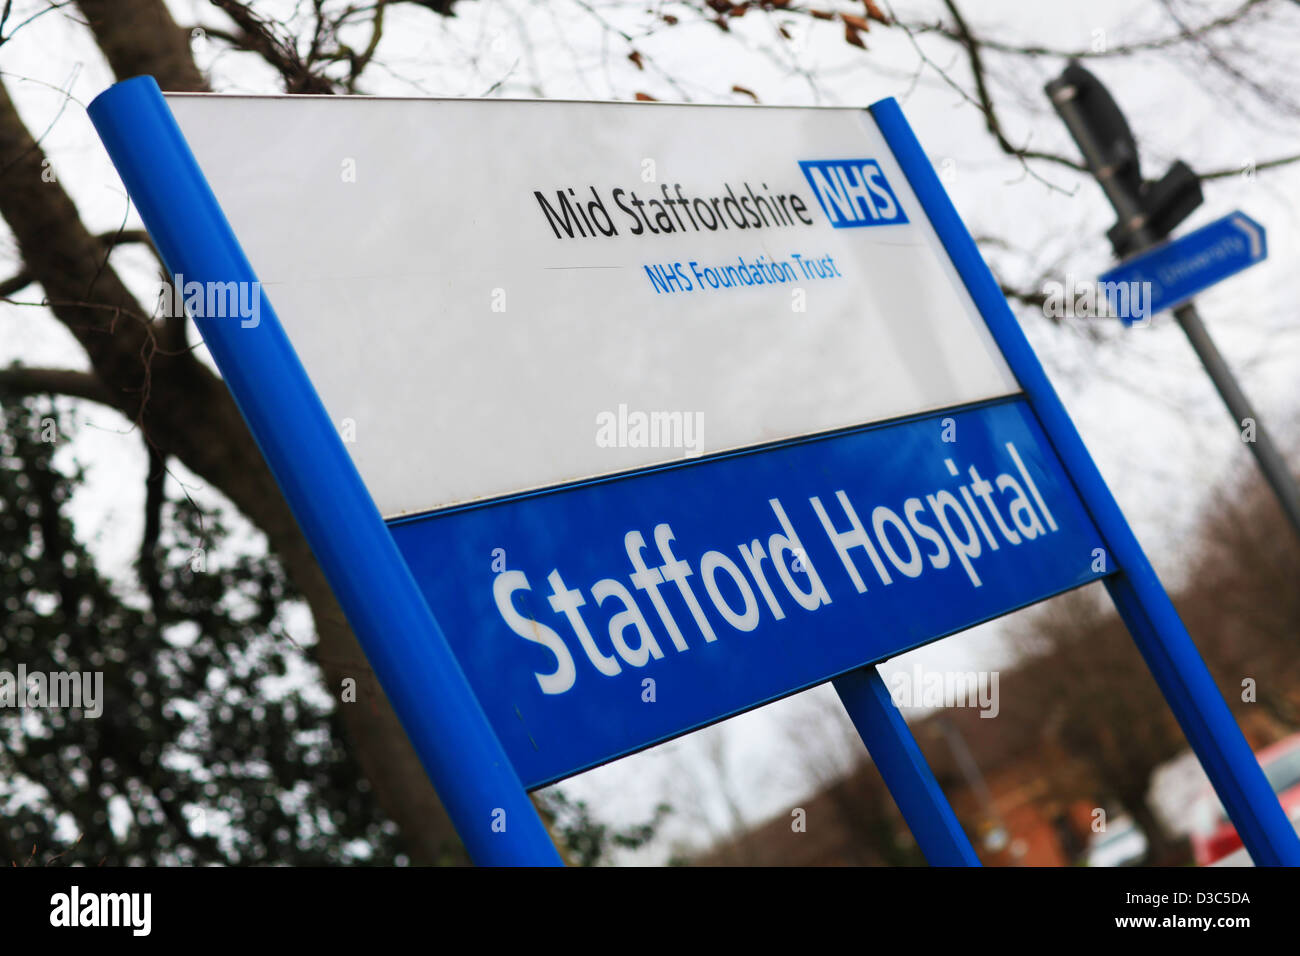 Stafford Hospital signage, Stock Photo